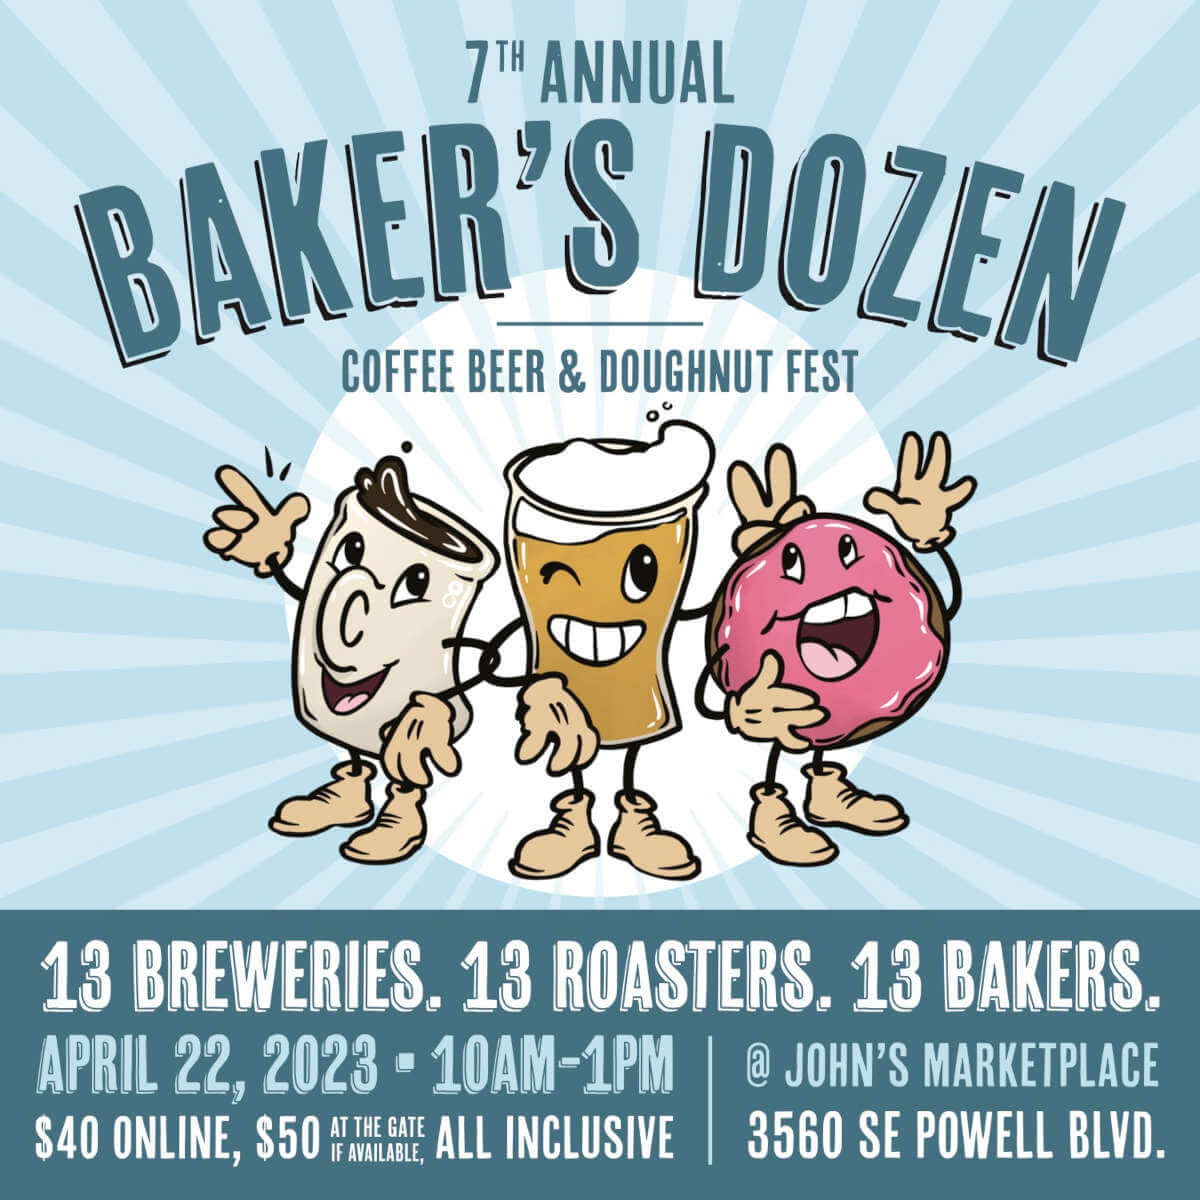 Coffee, beer, and doughnut lovers rejoice – Baker’s Dozen returns April 22nd